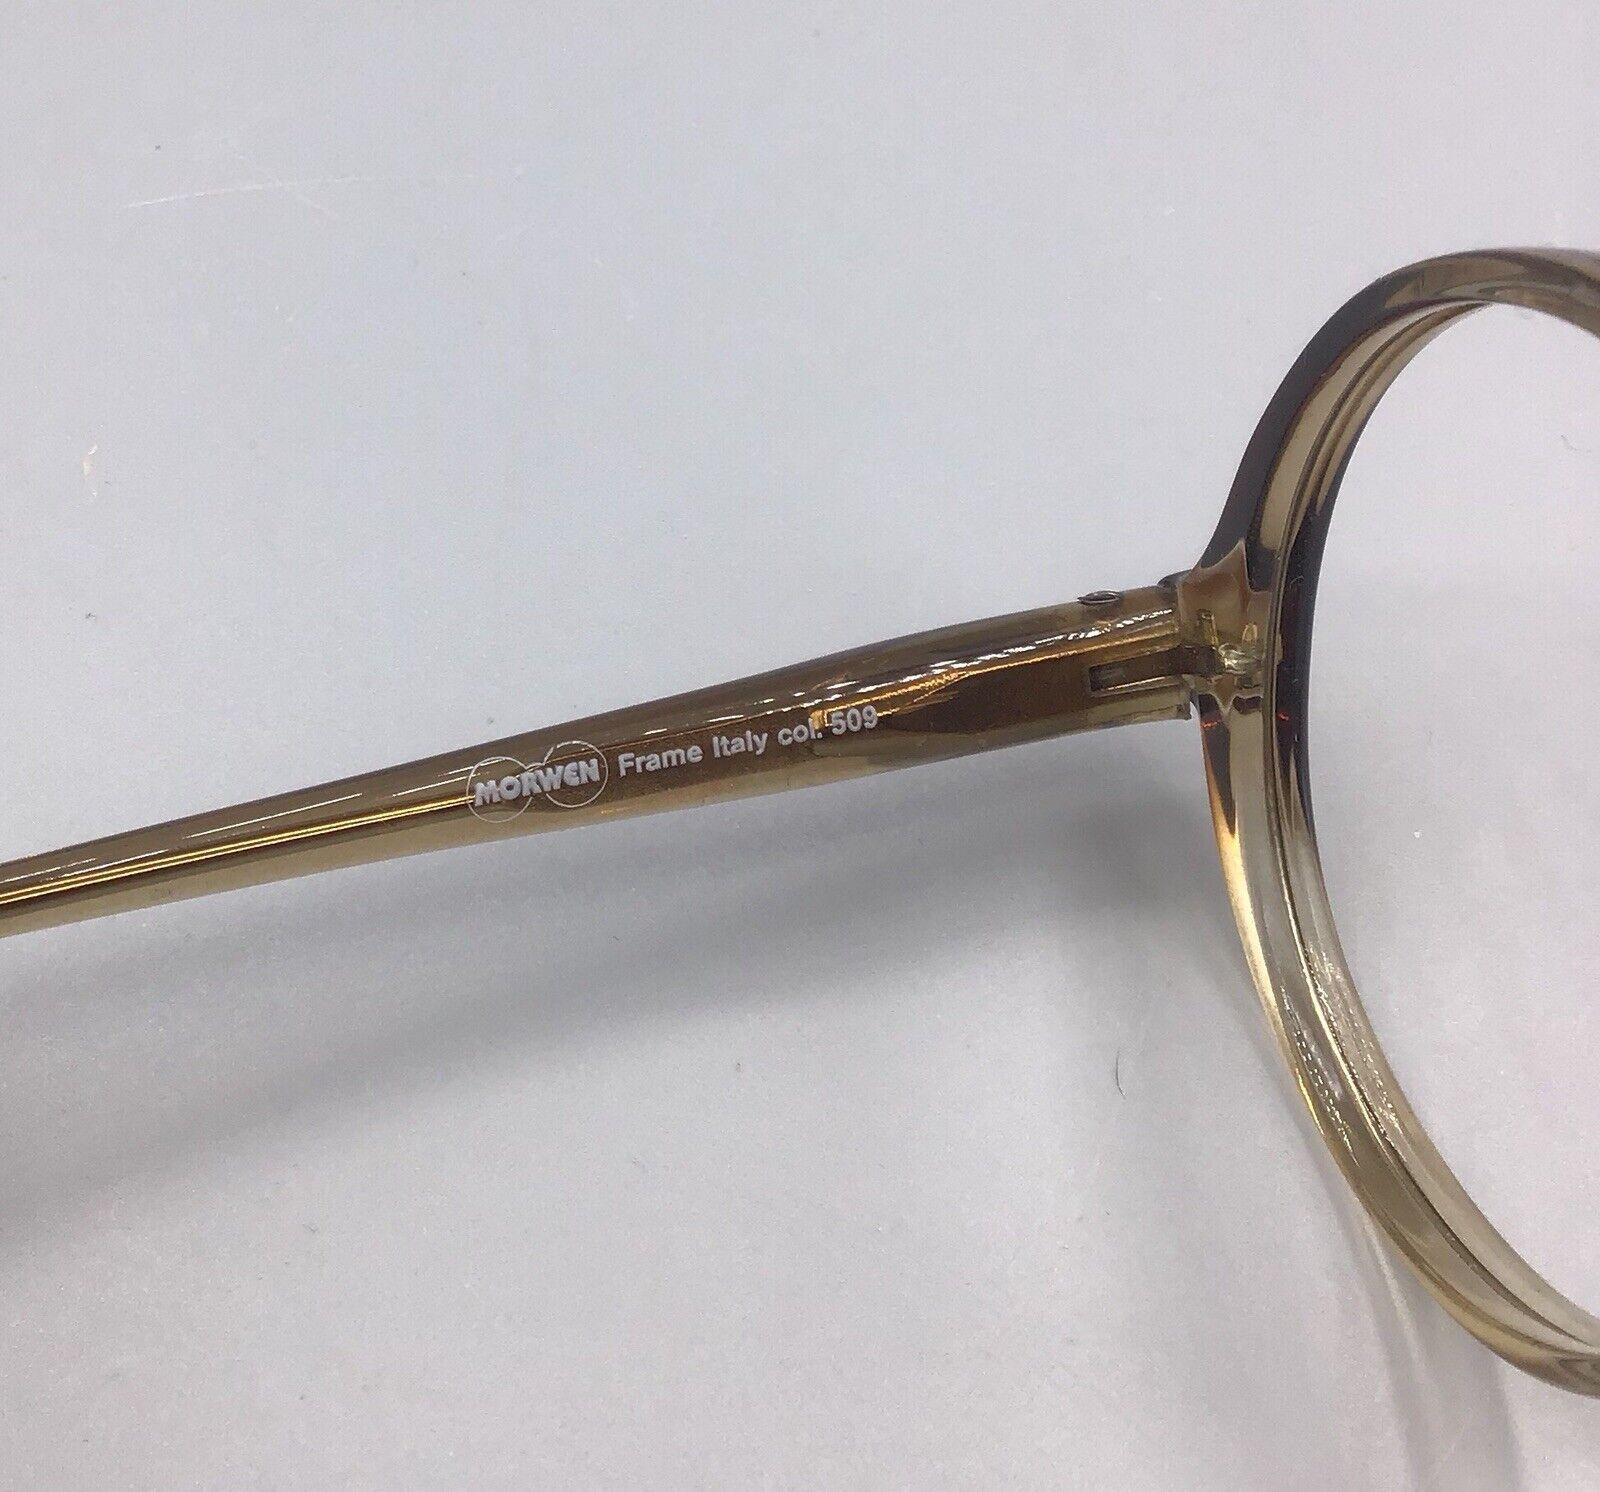 Morwen Filo de Oro Frame Italy col. 509 TITTI occhiale eyewear brillen lunettes